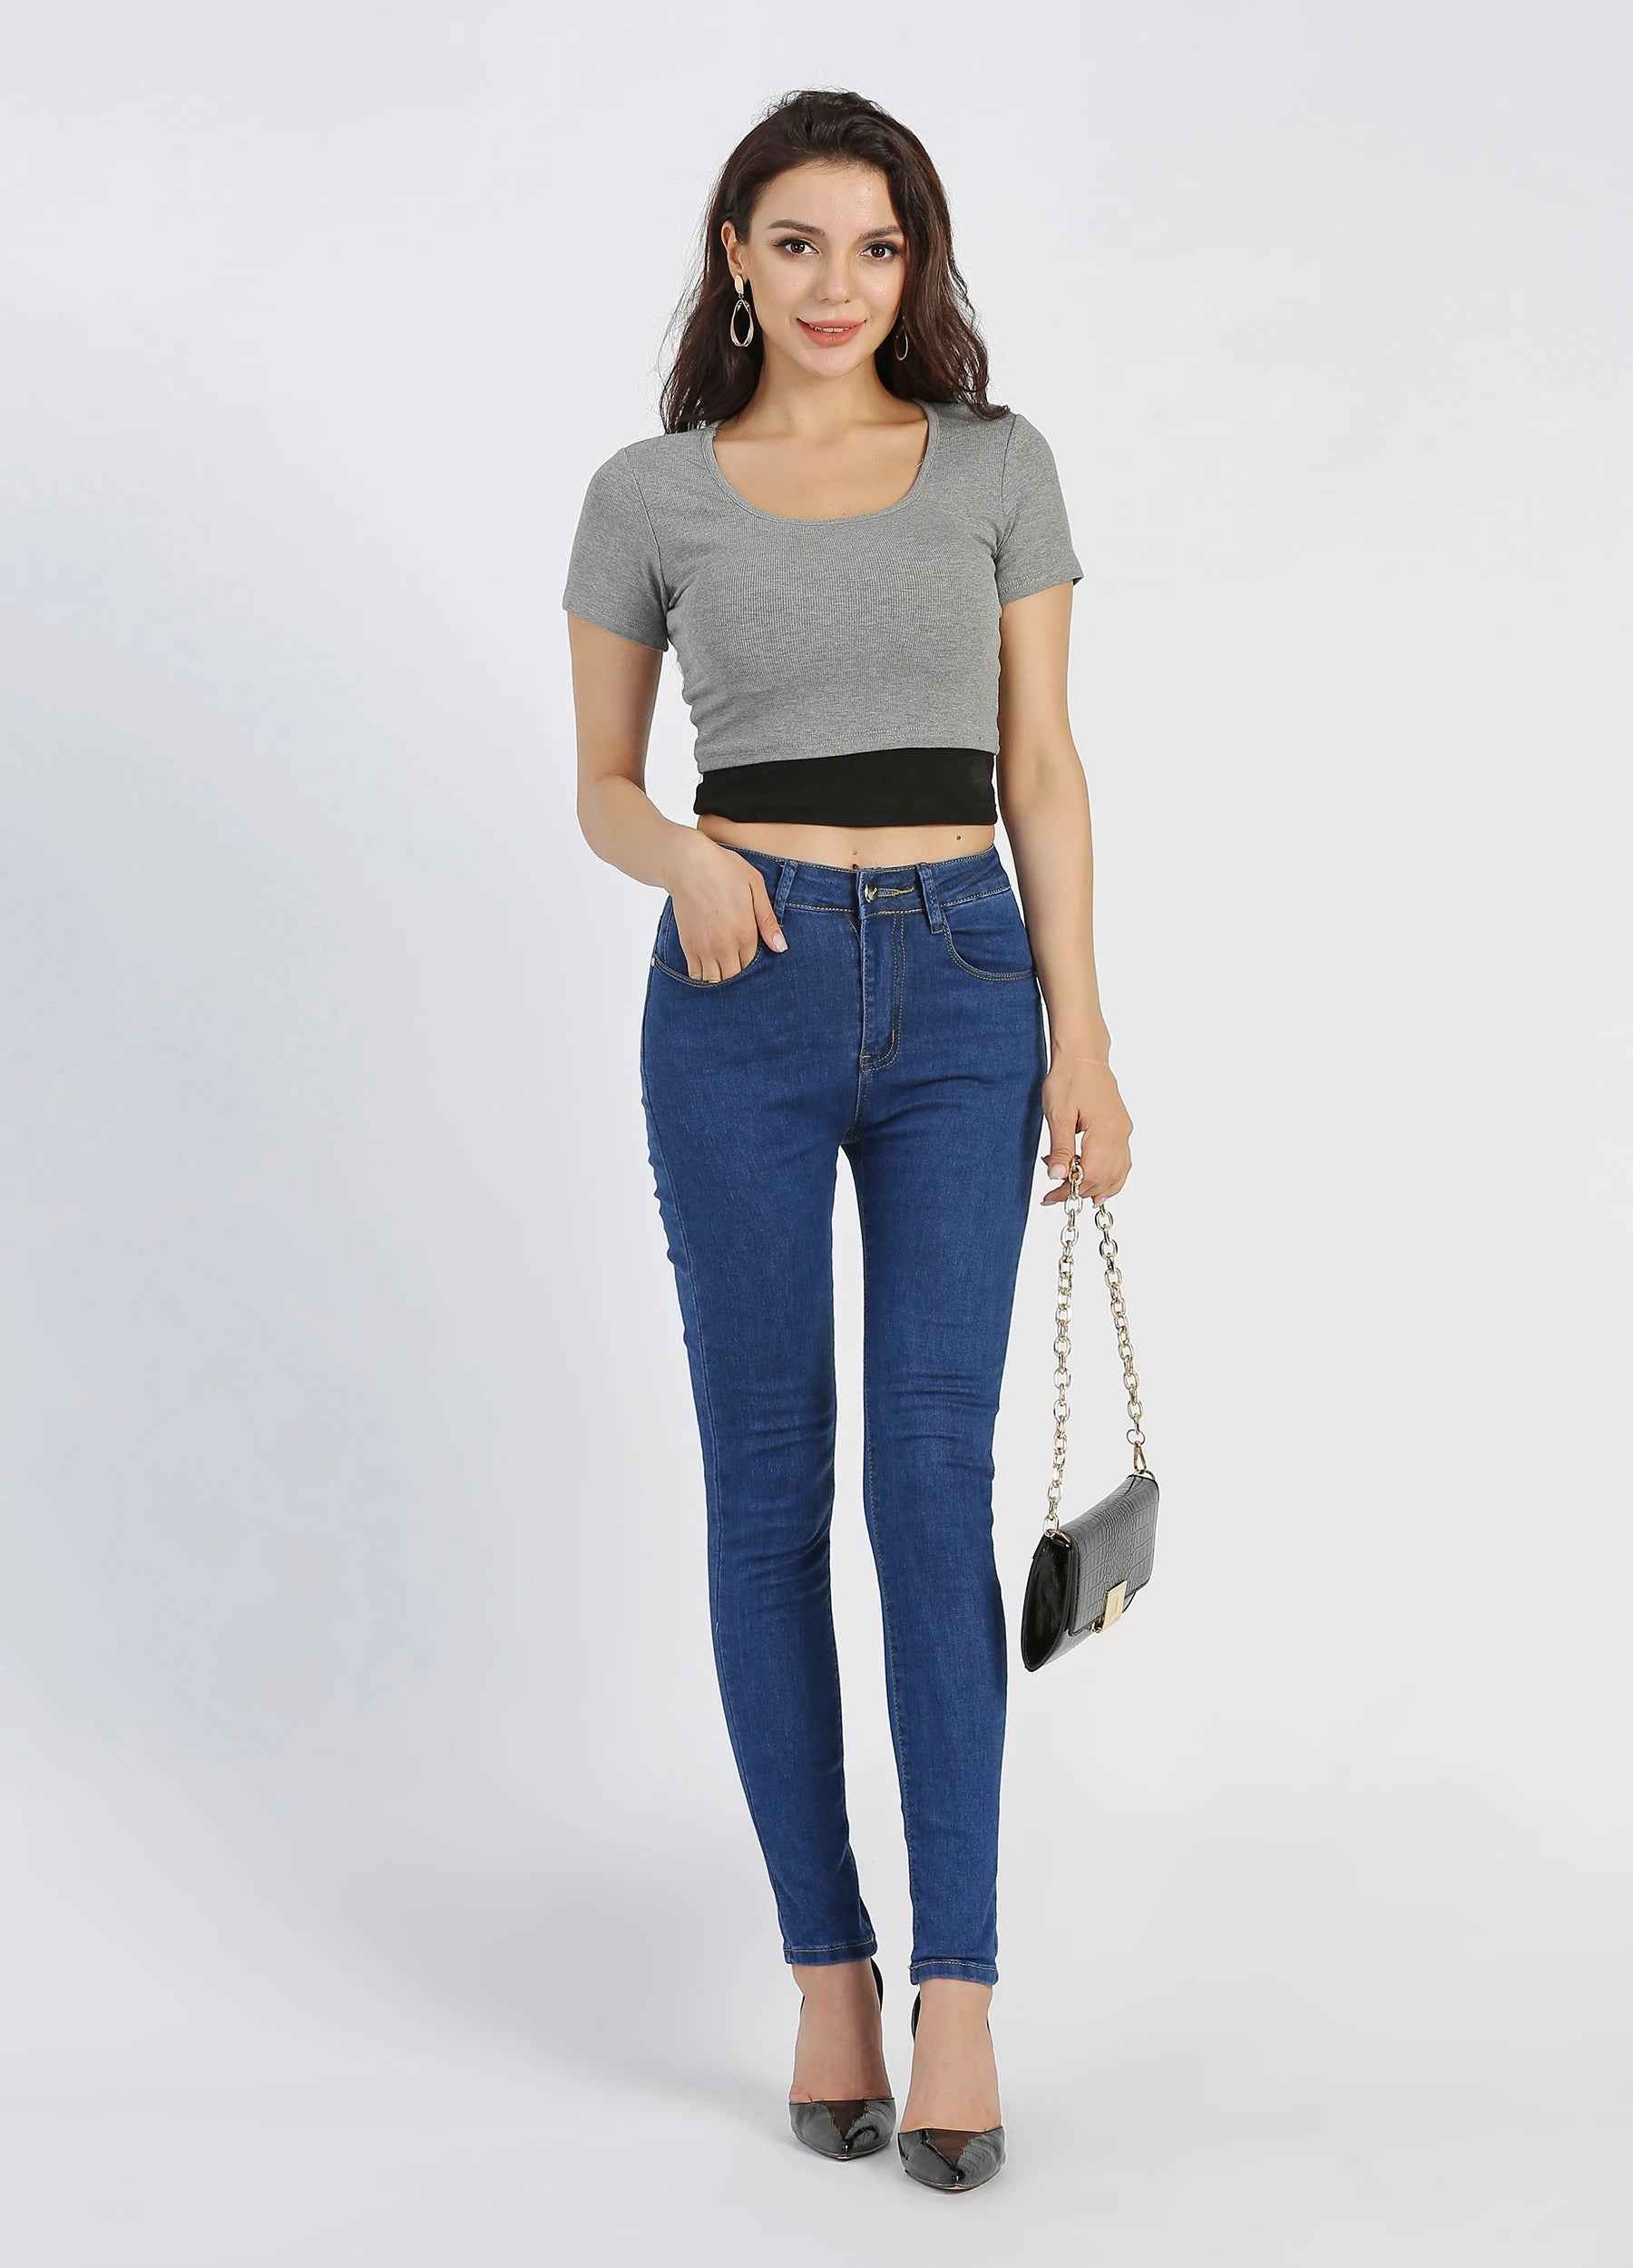 MECALA Womens High Rise Skinny Jeans High Waist Denim Pants